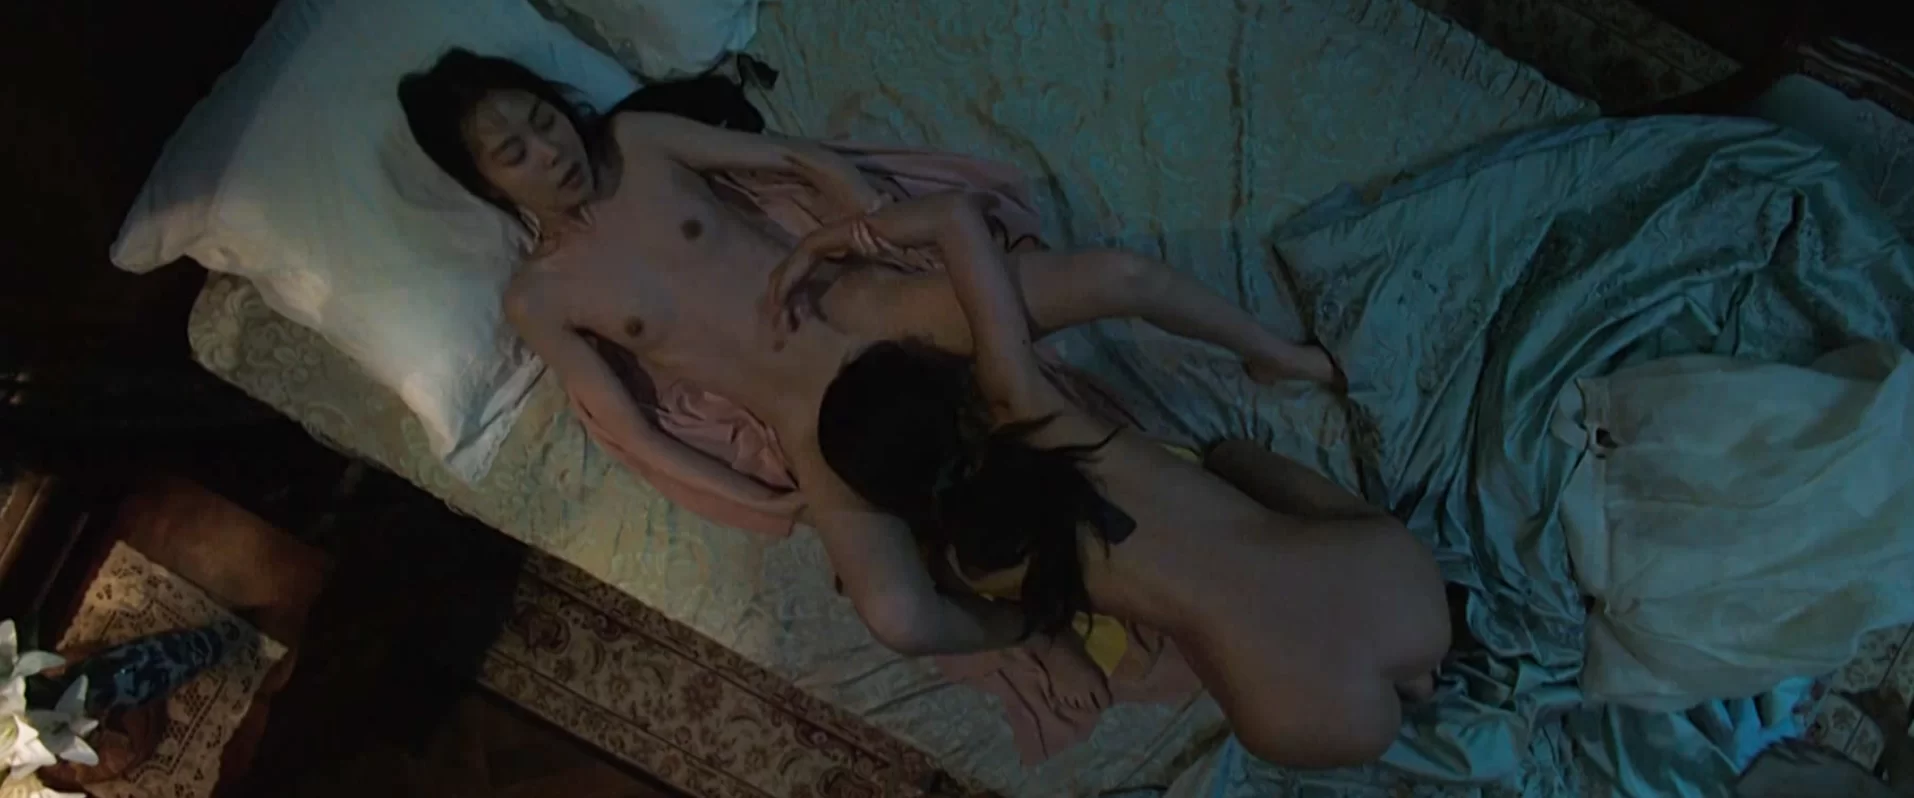 The handmaiden movie sex scene porn